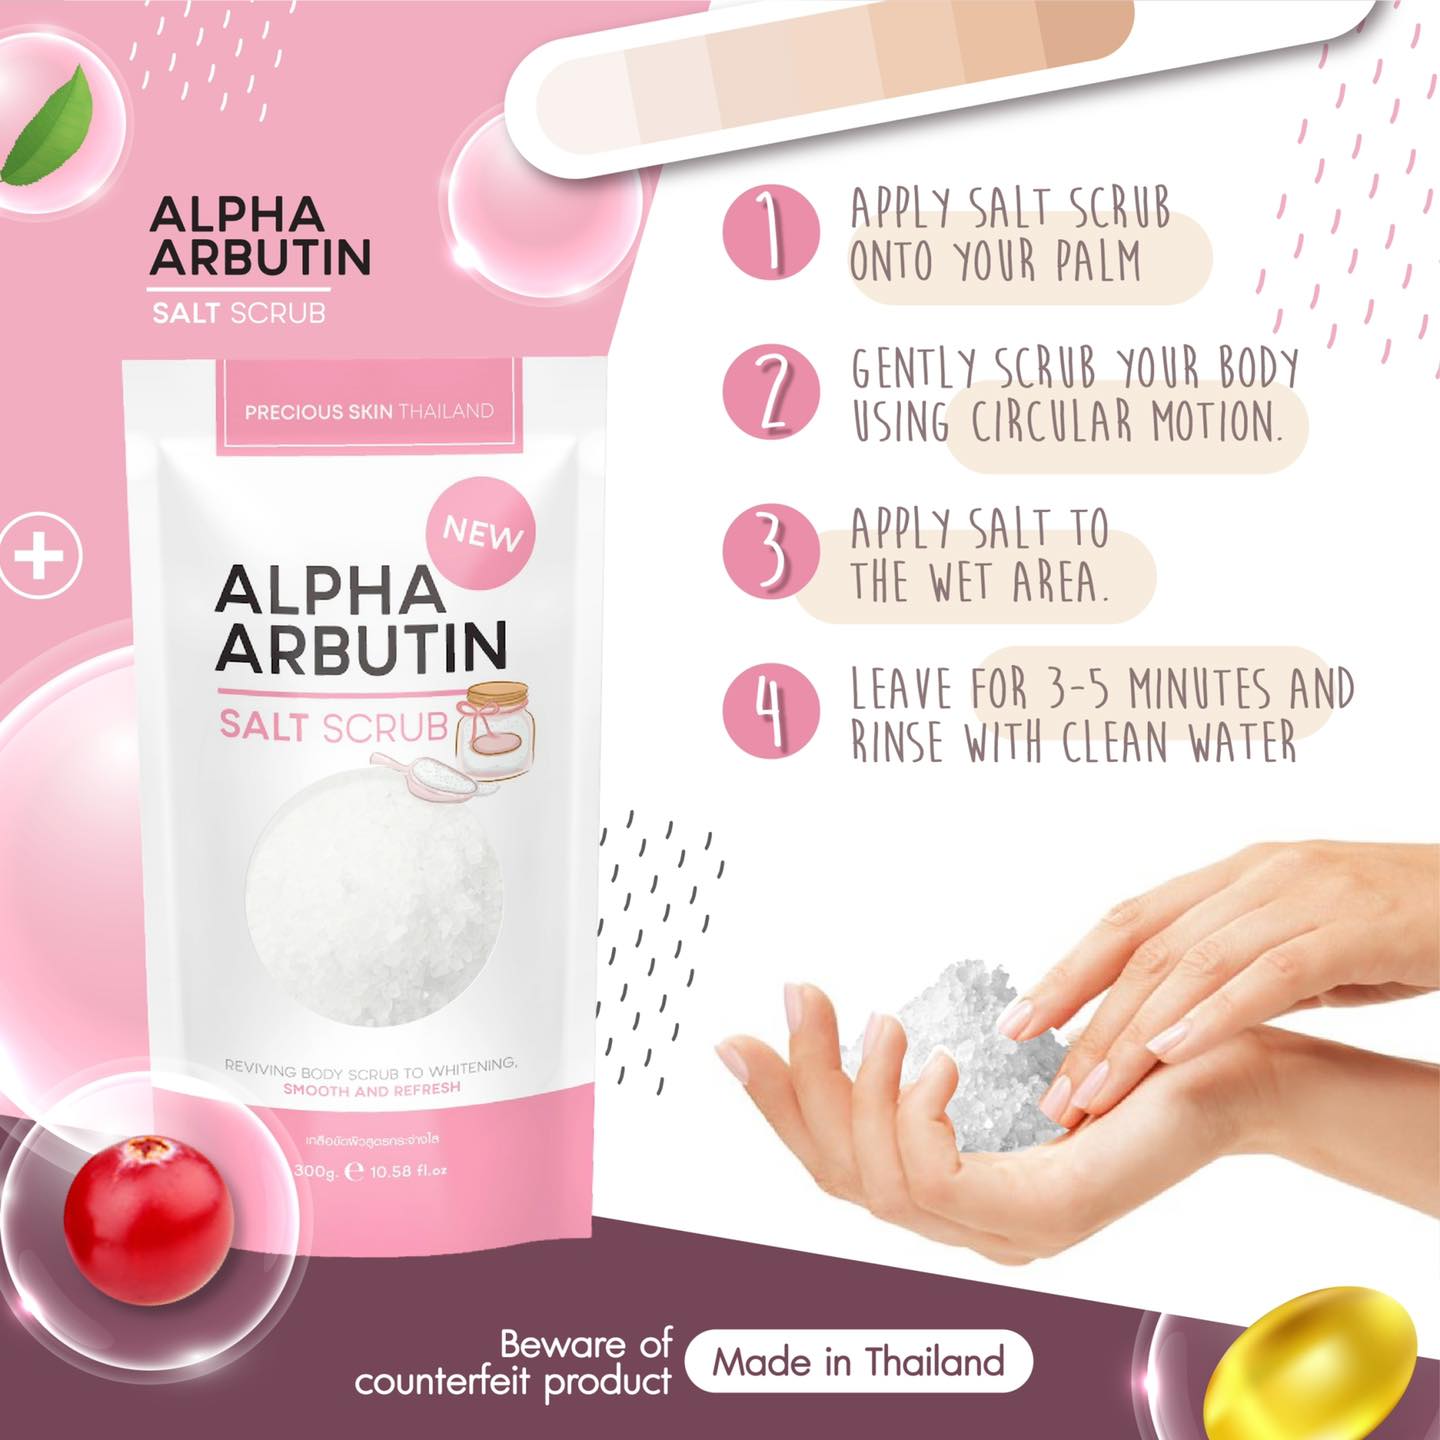 Precious Skin,Precious Skin Alpha Arbotin Salt Scrub 300 g,Alpha Arbotin Salt Scrub 300 g,Alpha Arbotin Salt Scrub 300 g ราคา,Alpha Arbotin Salt Scrub 300 g รีวิว,